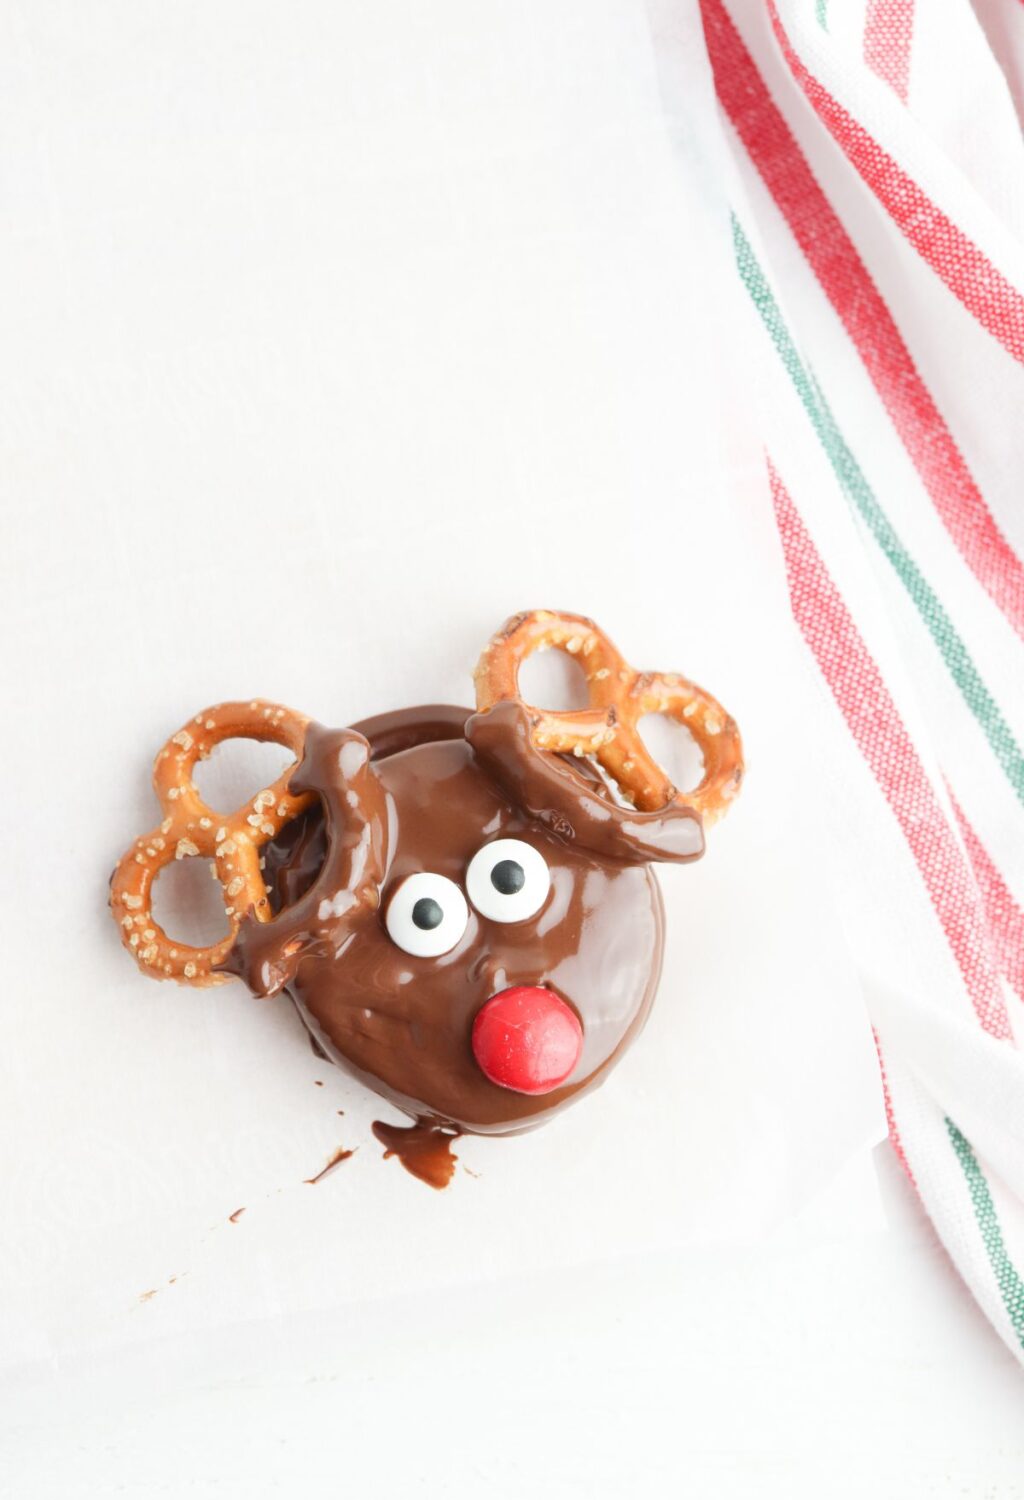 Chocolate reindeer pretzels on a napkin.